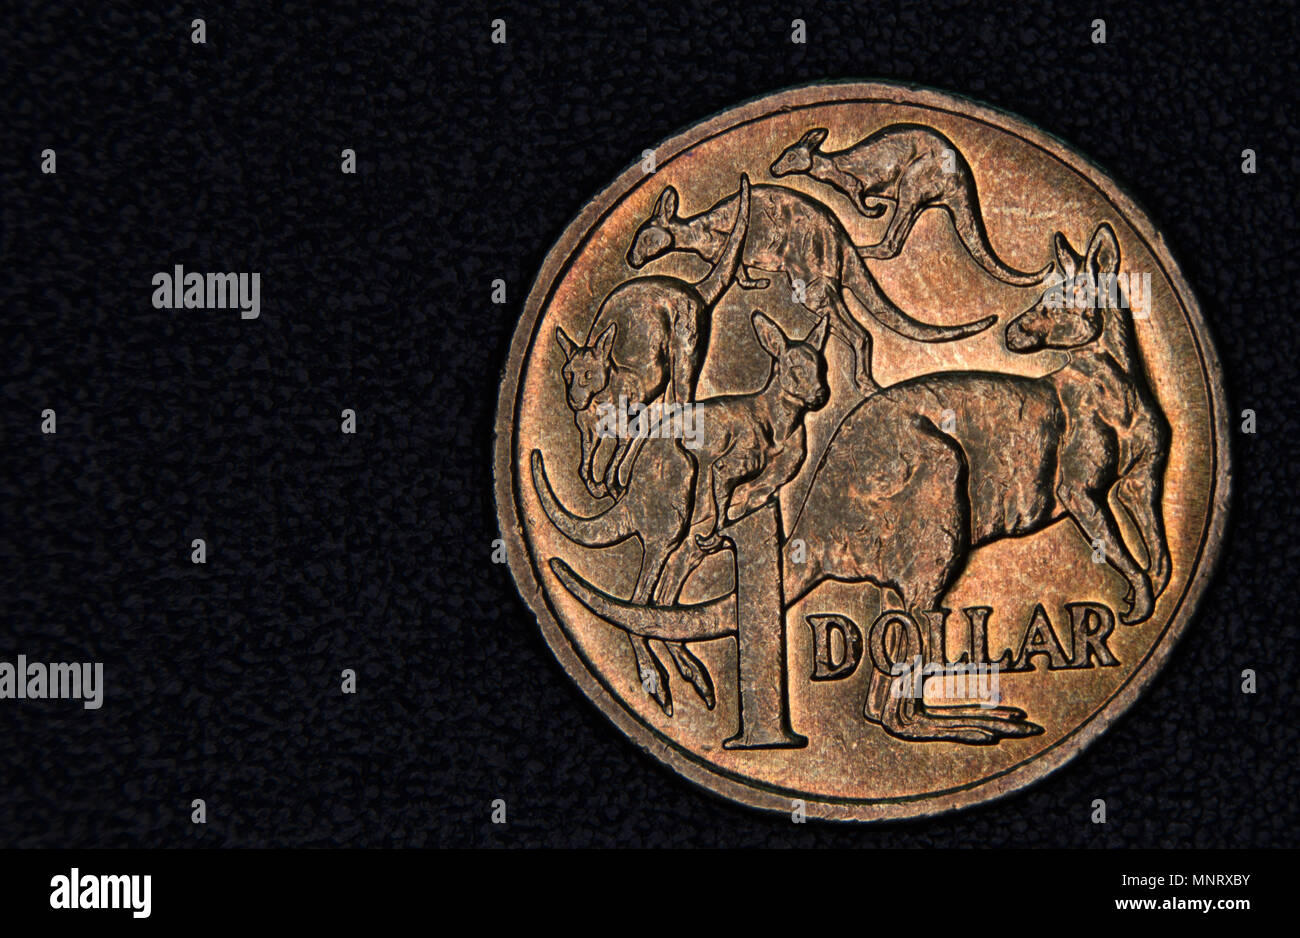 Colonial Stor eg kone Closeup of an Australian 1 dollar coin on a dark background Stock Photo -  Alamy